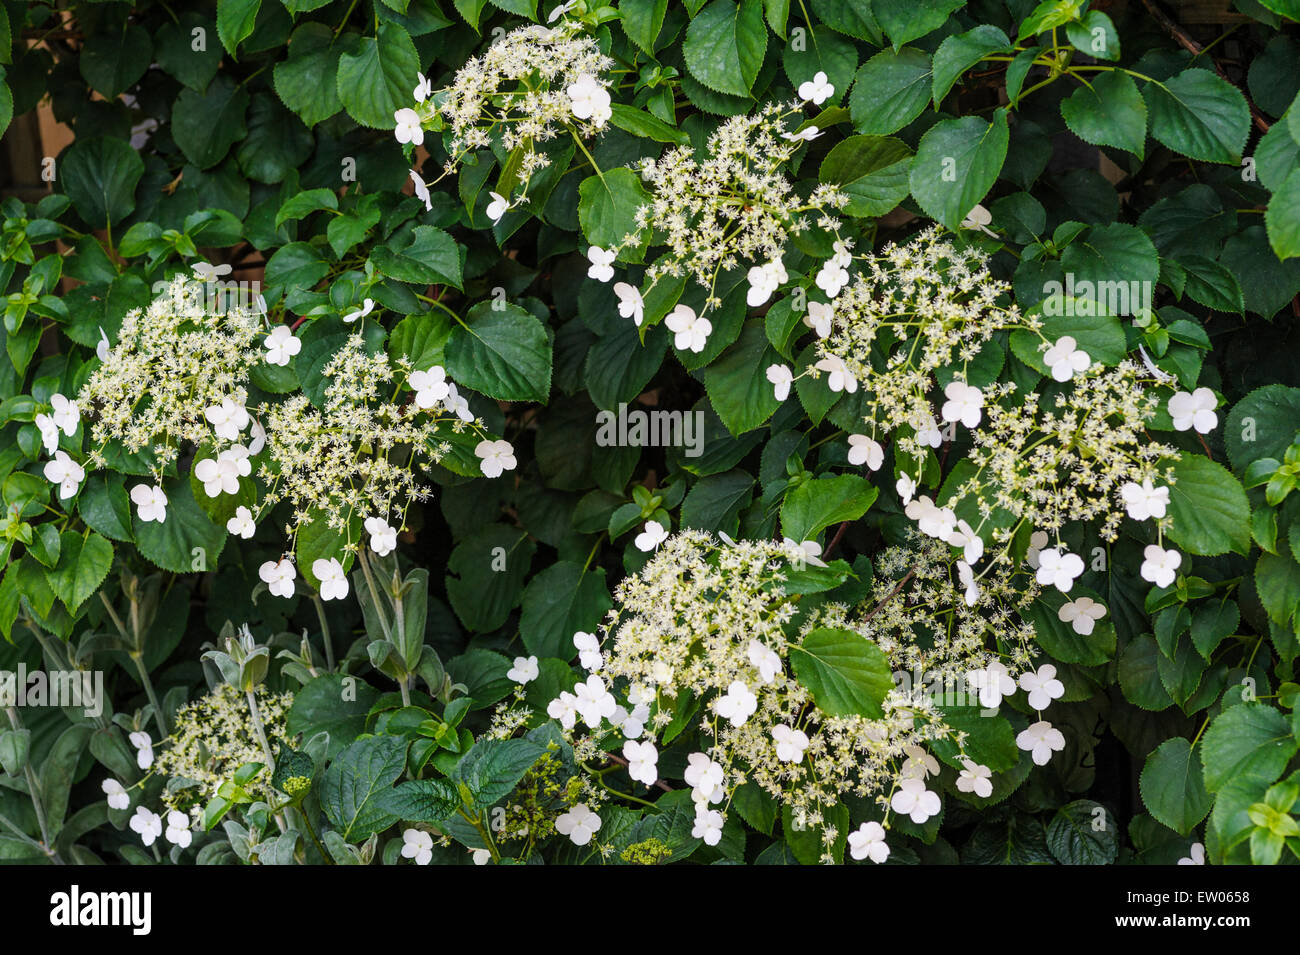 Climbing White Hydrangea Flowers in bloom Original Photography Print 8x8inch